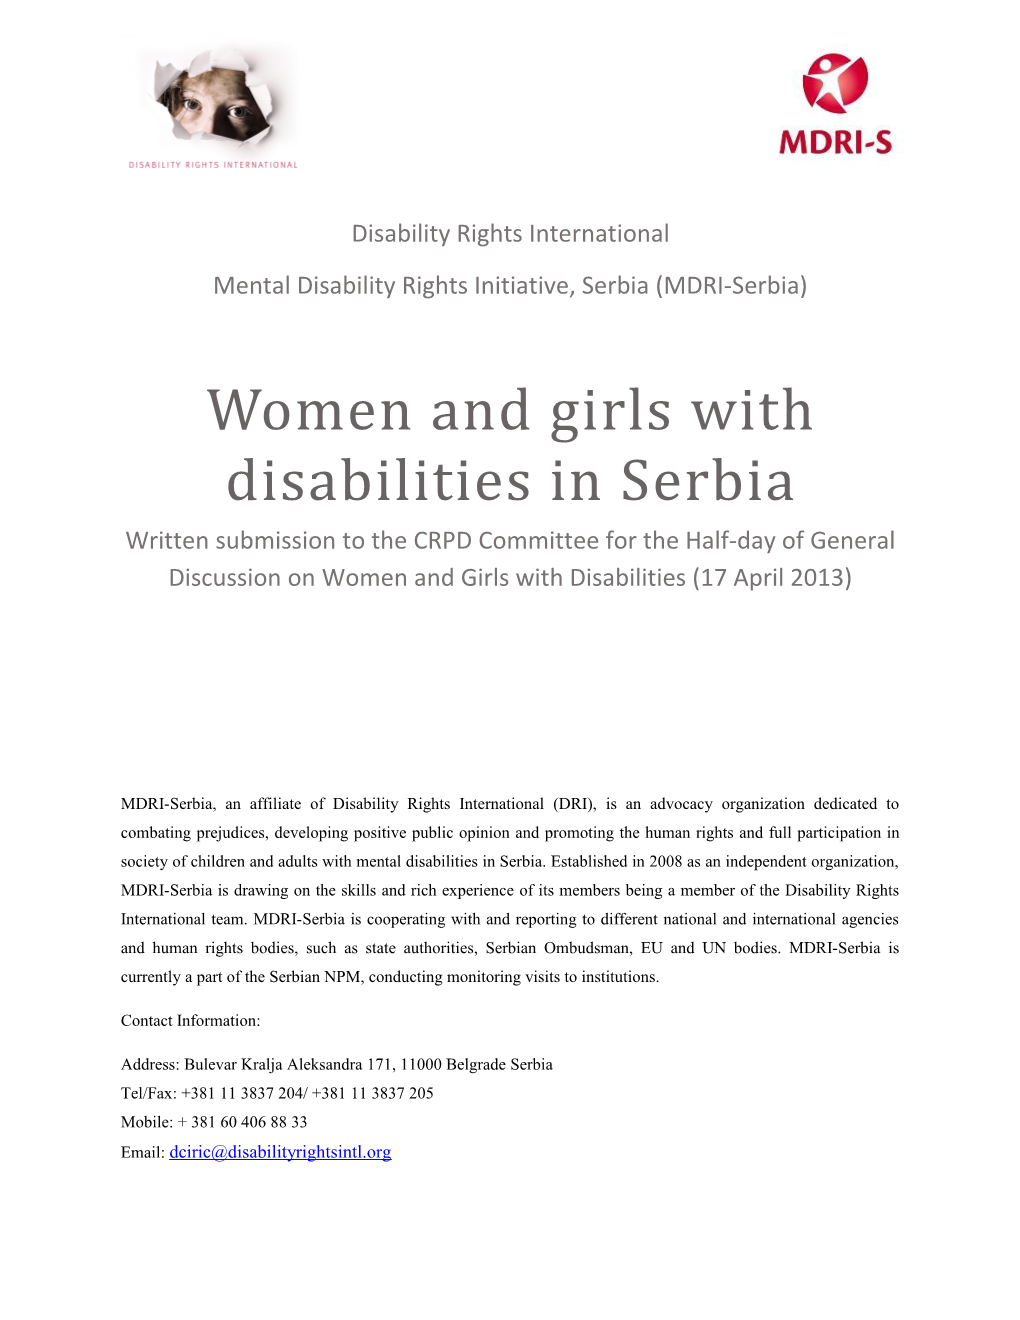 Mental Disability Rights Initiative, Serbia(MDRI-Serbia)